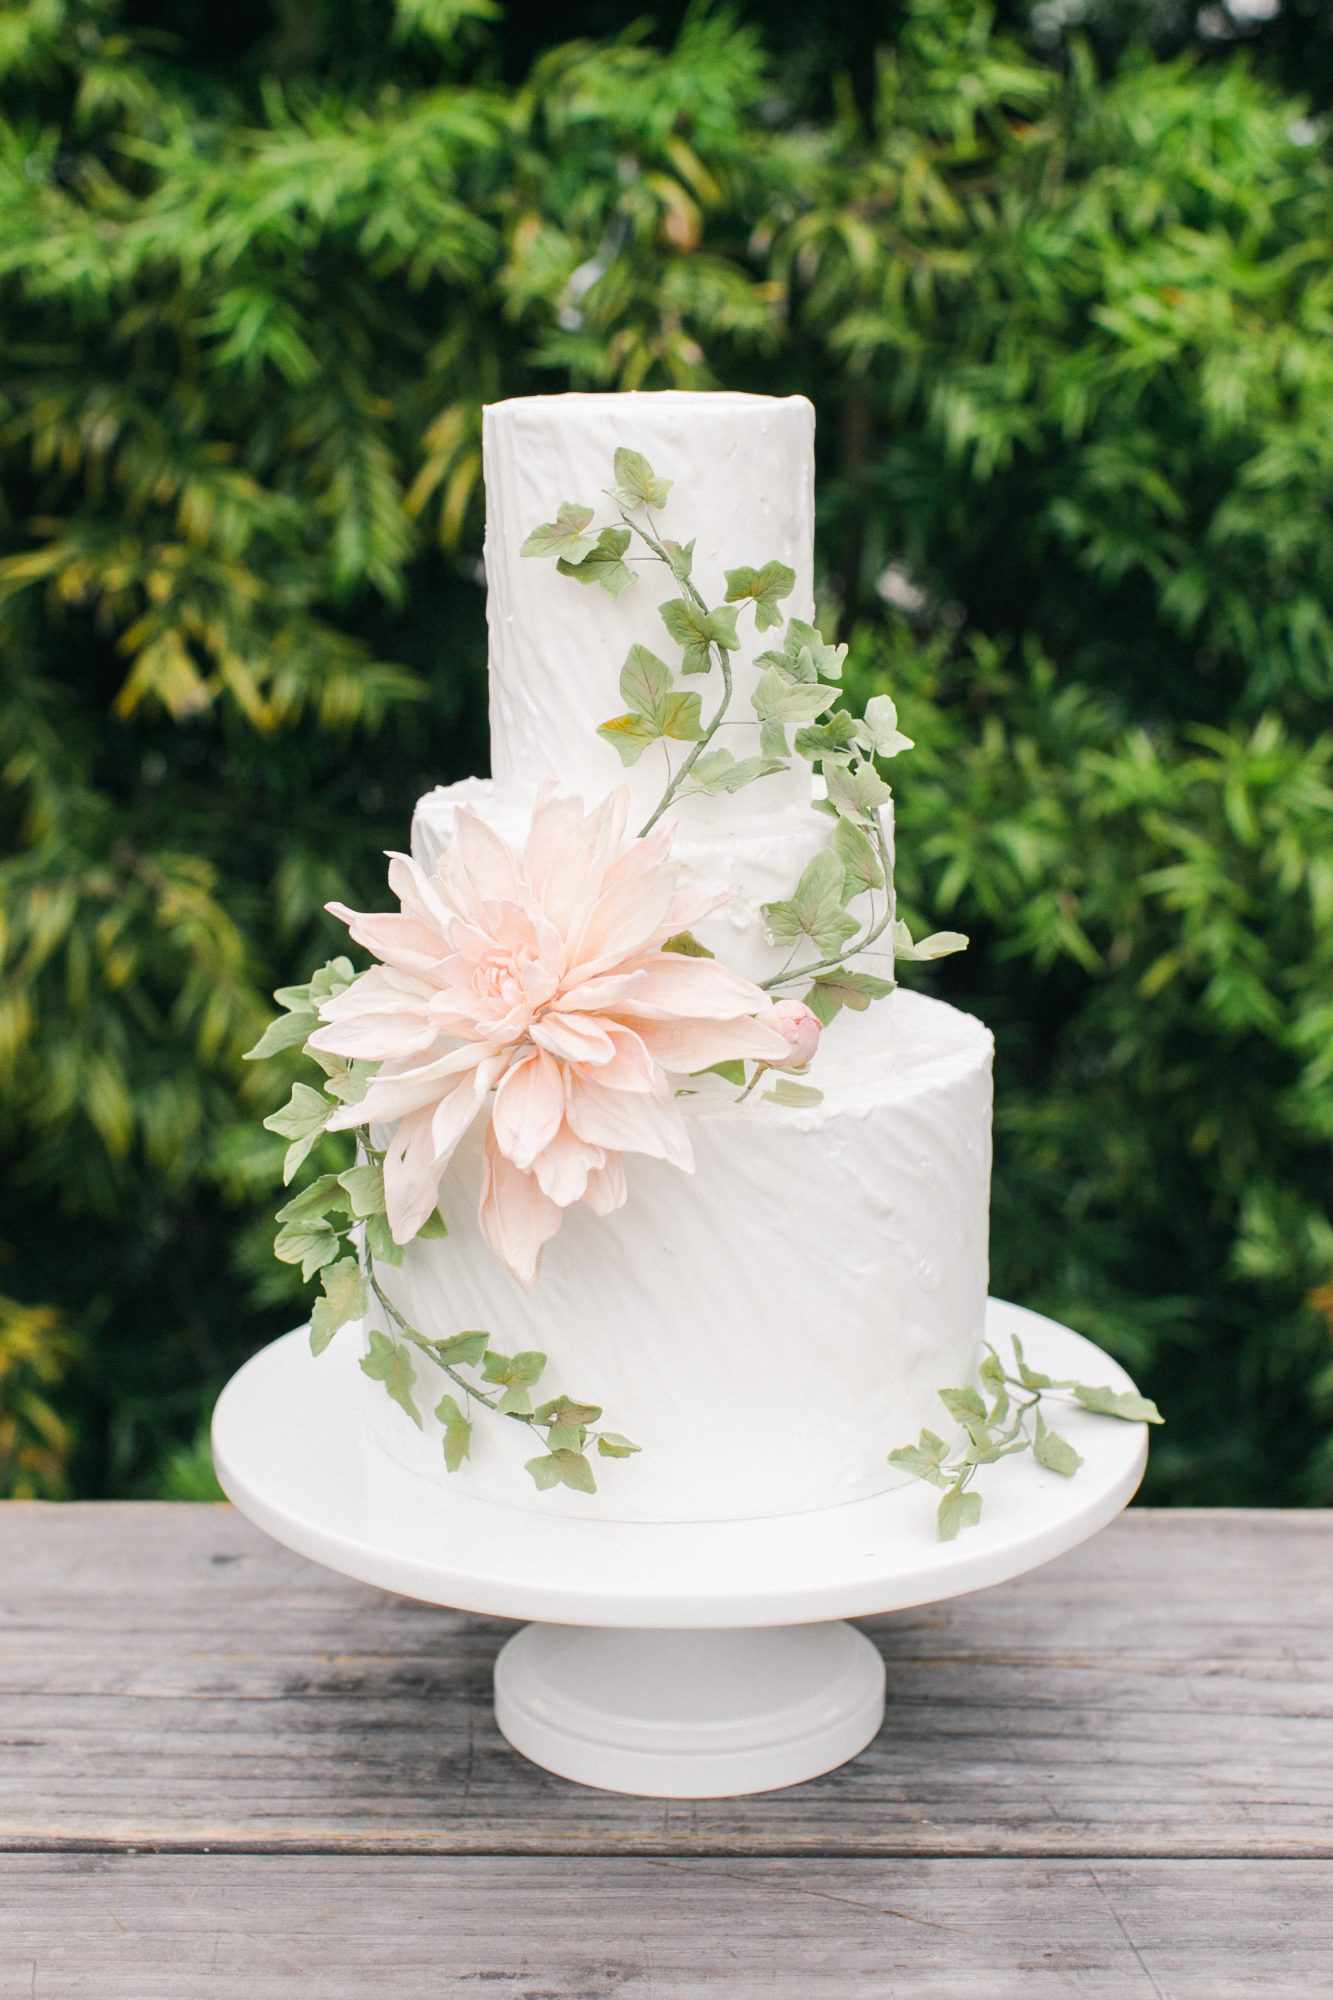 BUDS DAISIES FLOWER WEDDING CAKE TOPPER DECORATION SUGAR ROSES MAGNOLIAS